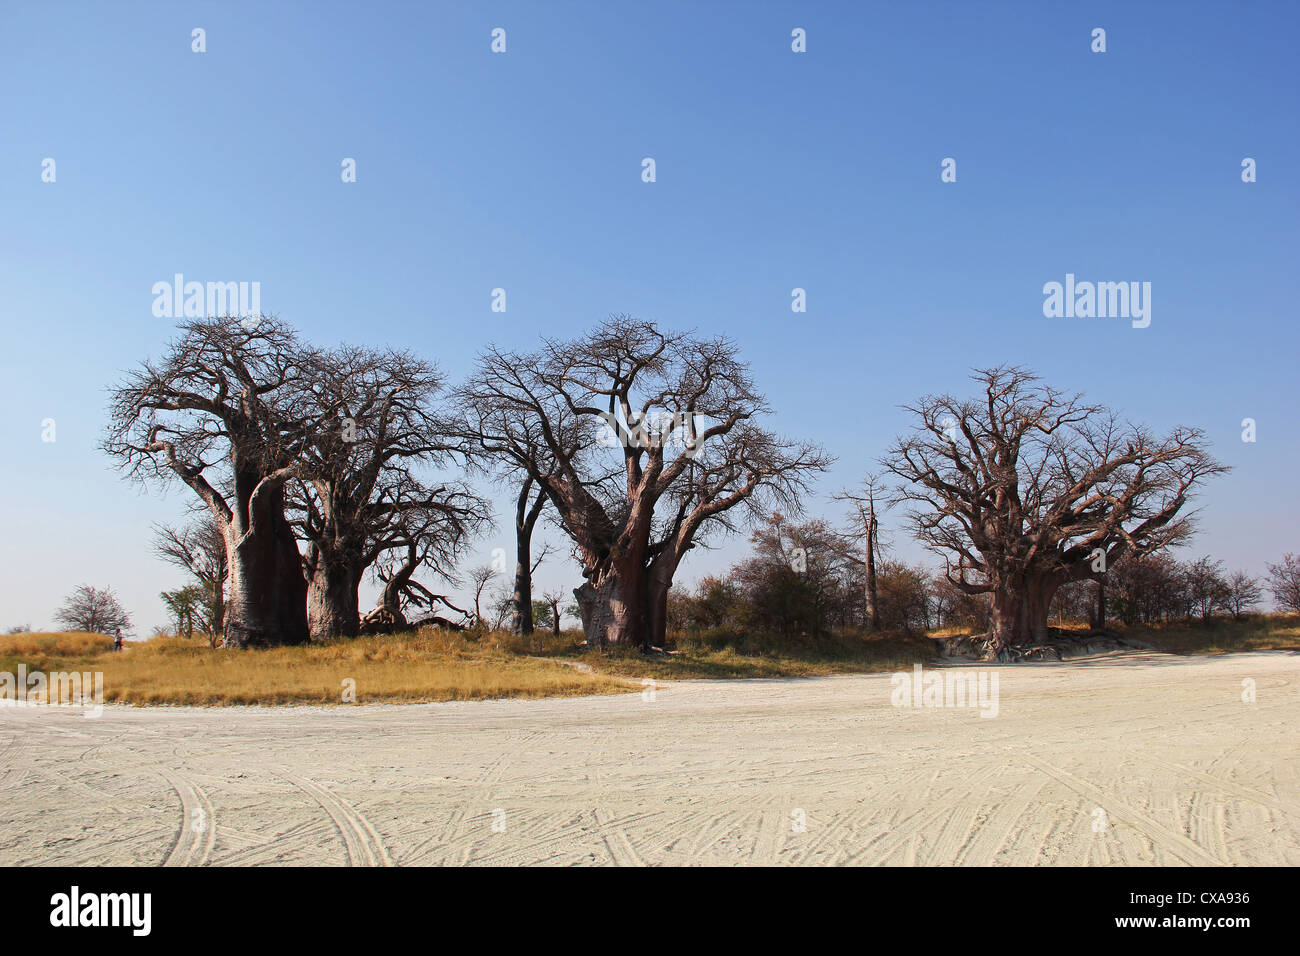 baine's baobabs botsuana Stock Photo